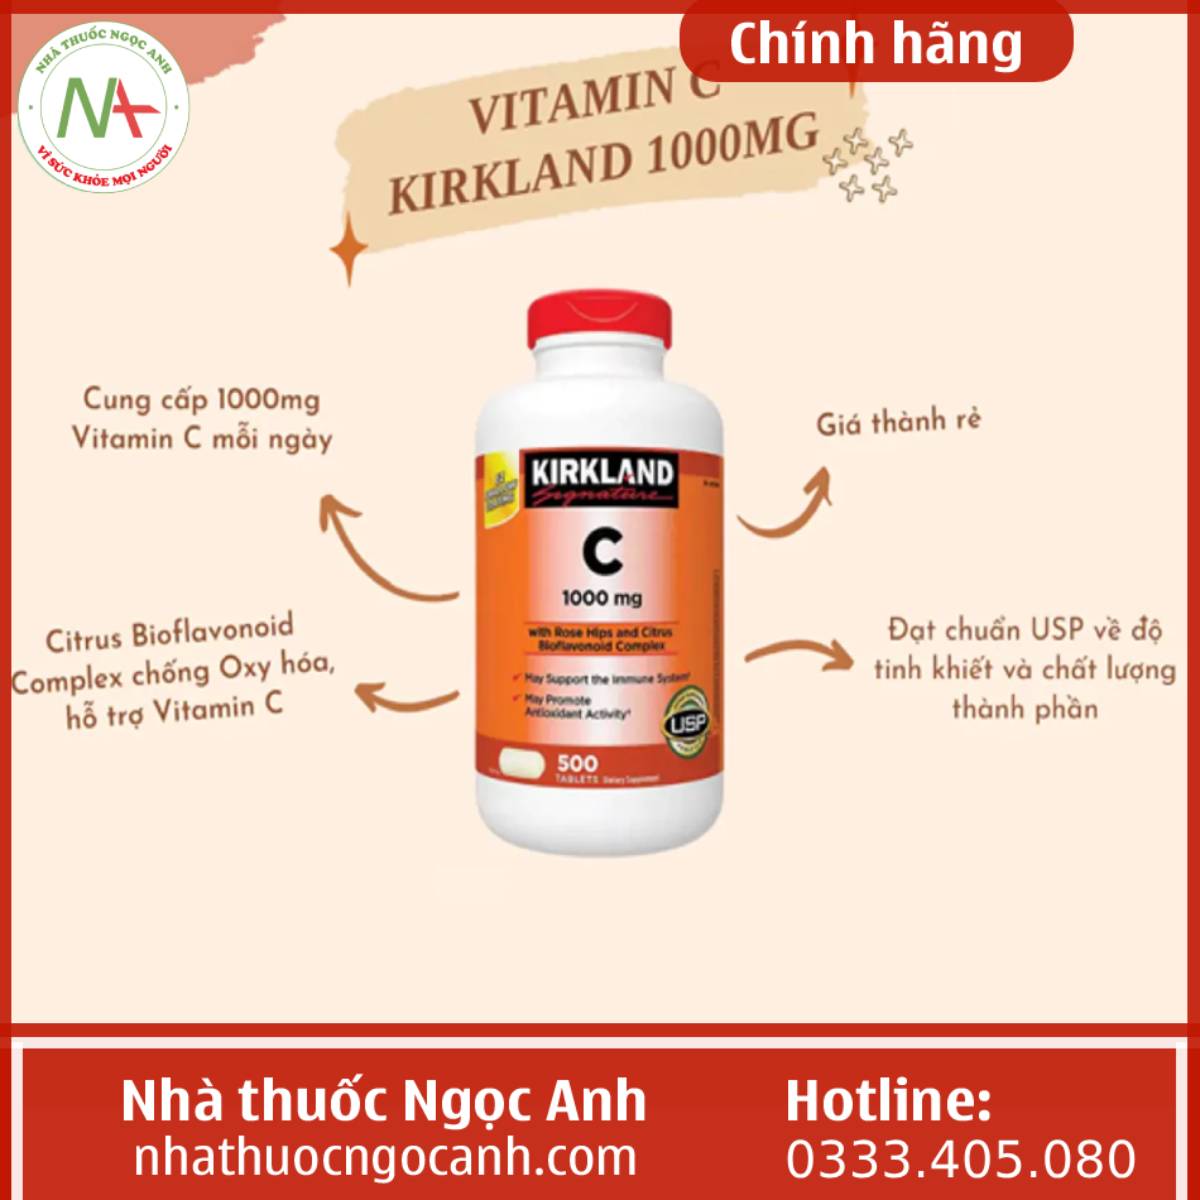 Vitamin C 1000mg Kirkland Signature bổ sung Vitamin C mỗi ngày